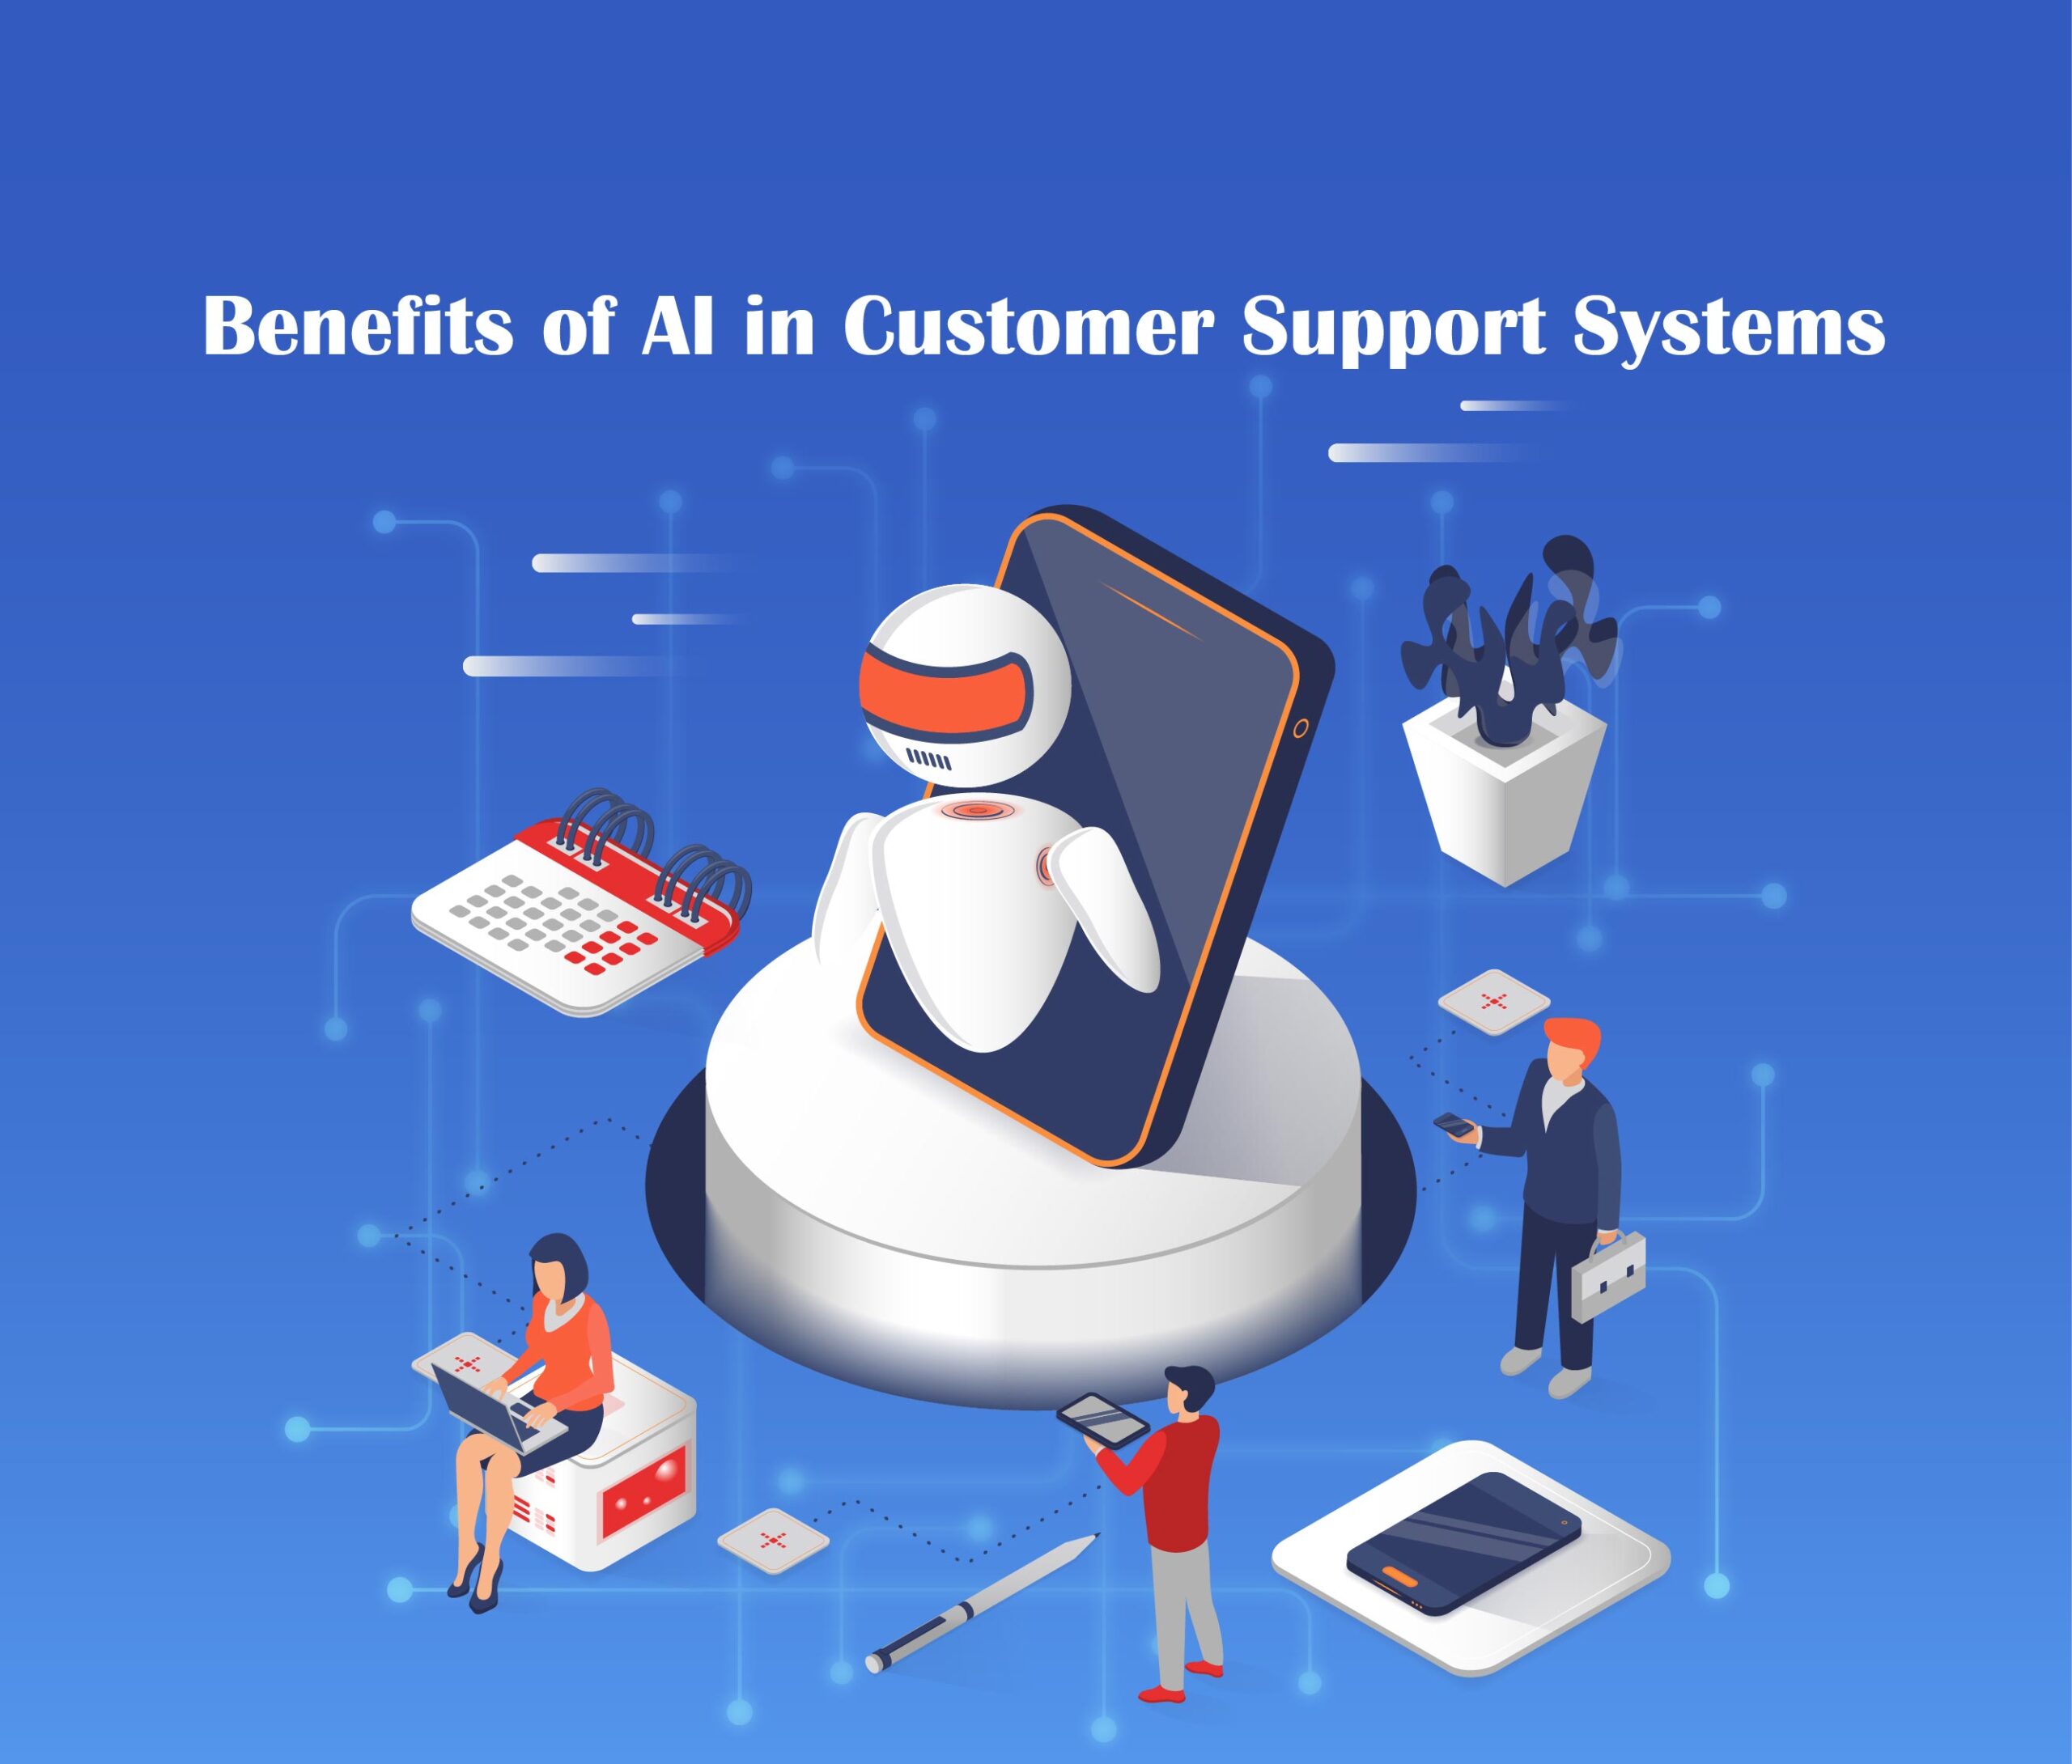 AI in Customer Support